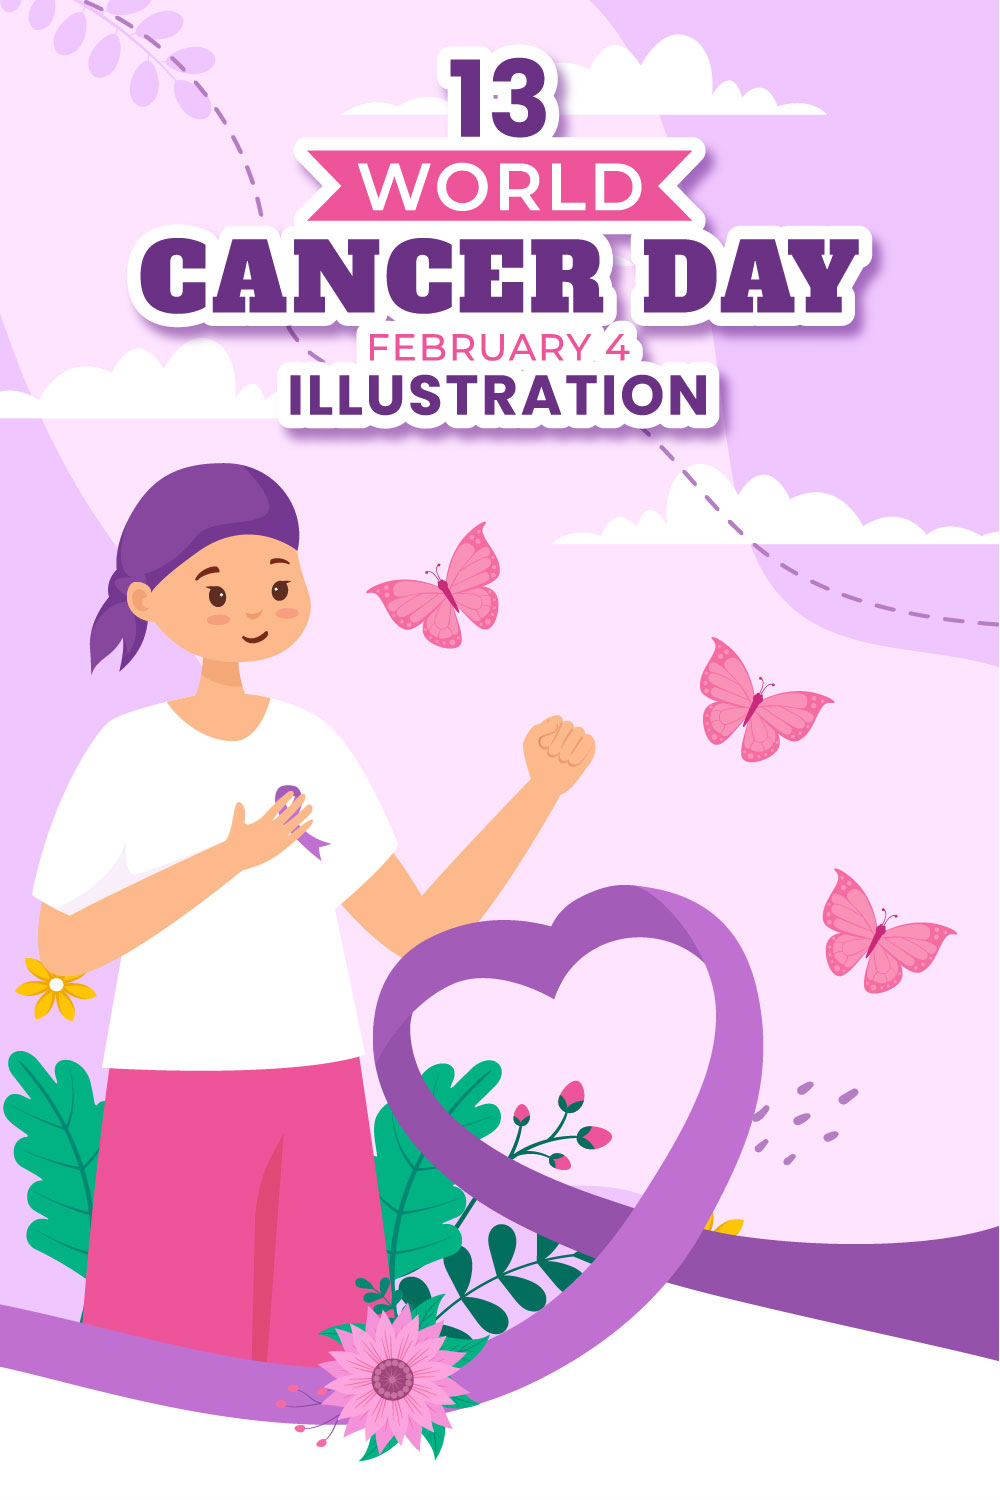 13 World Cancer Day Illustration pinterest preview image.